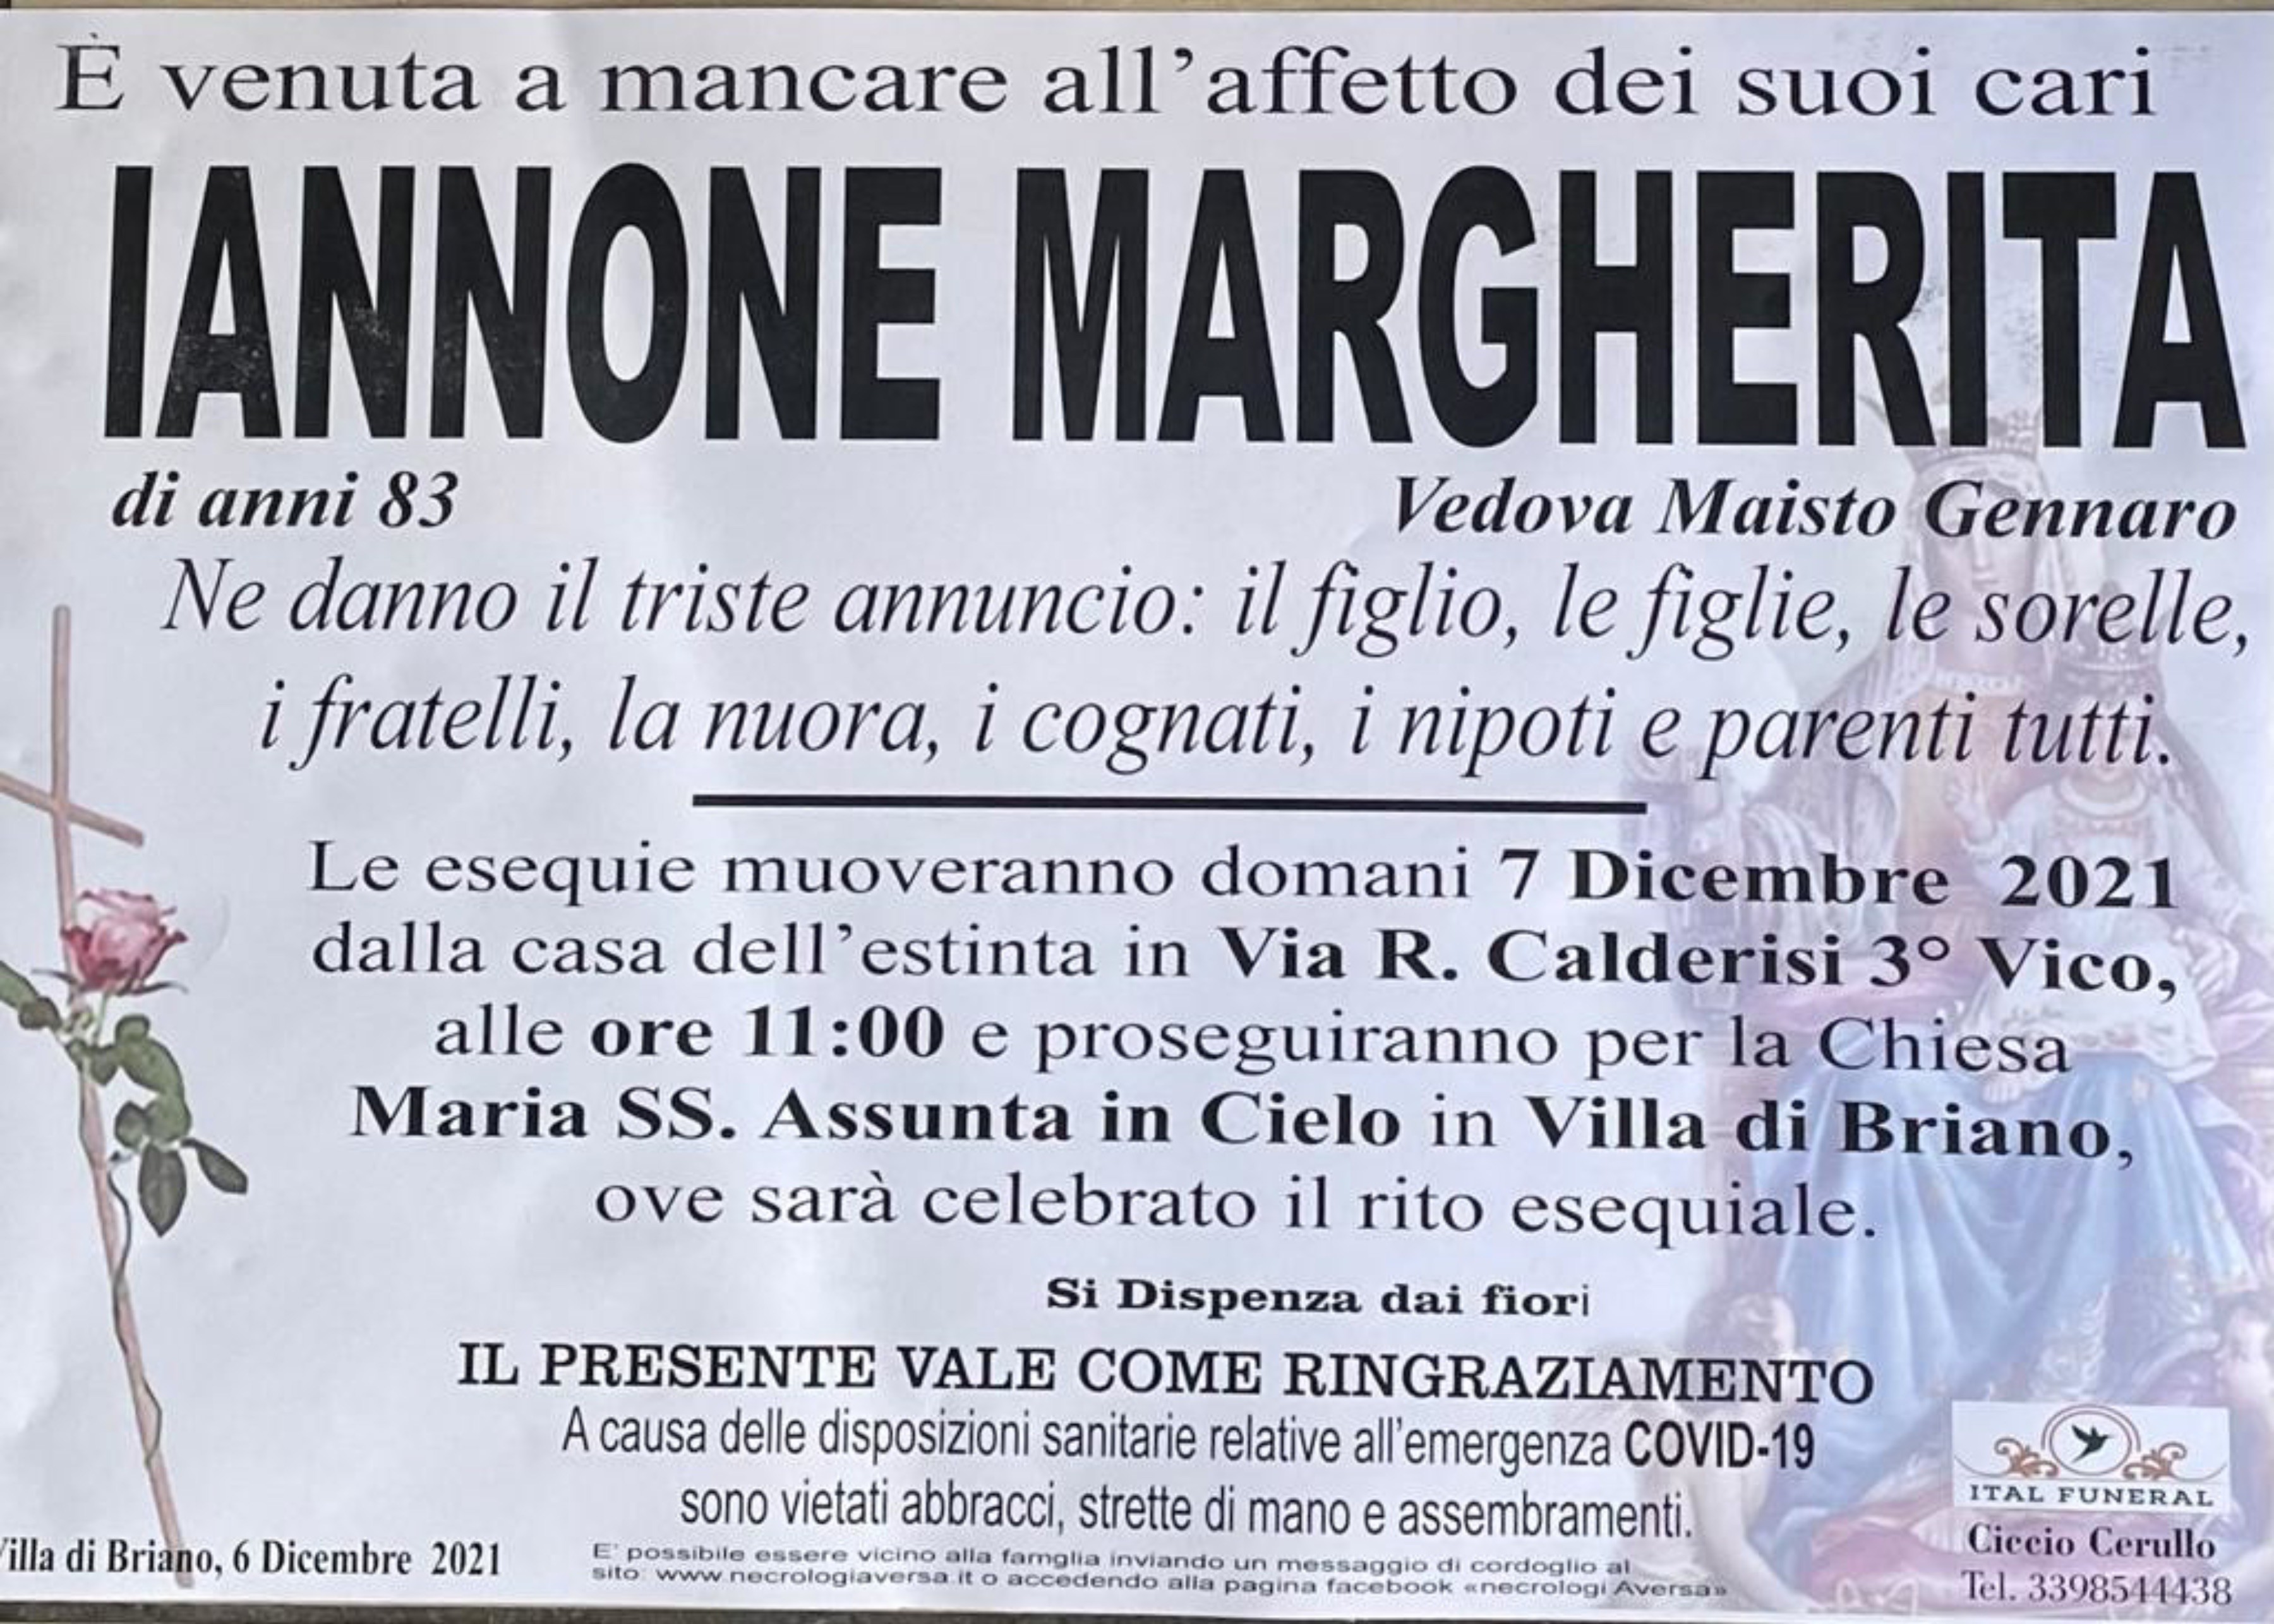 Margherita Iannone